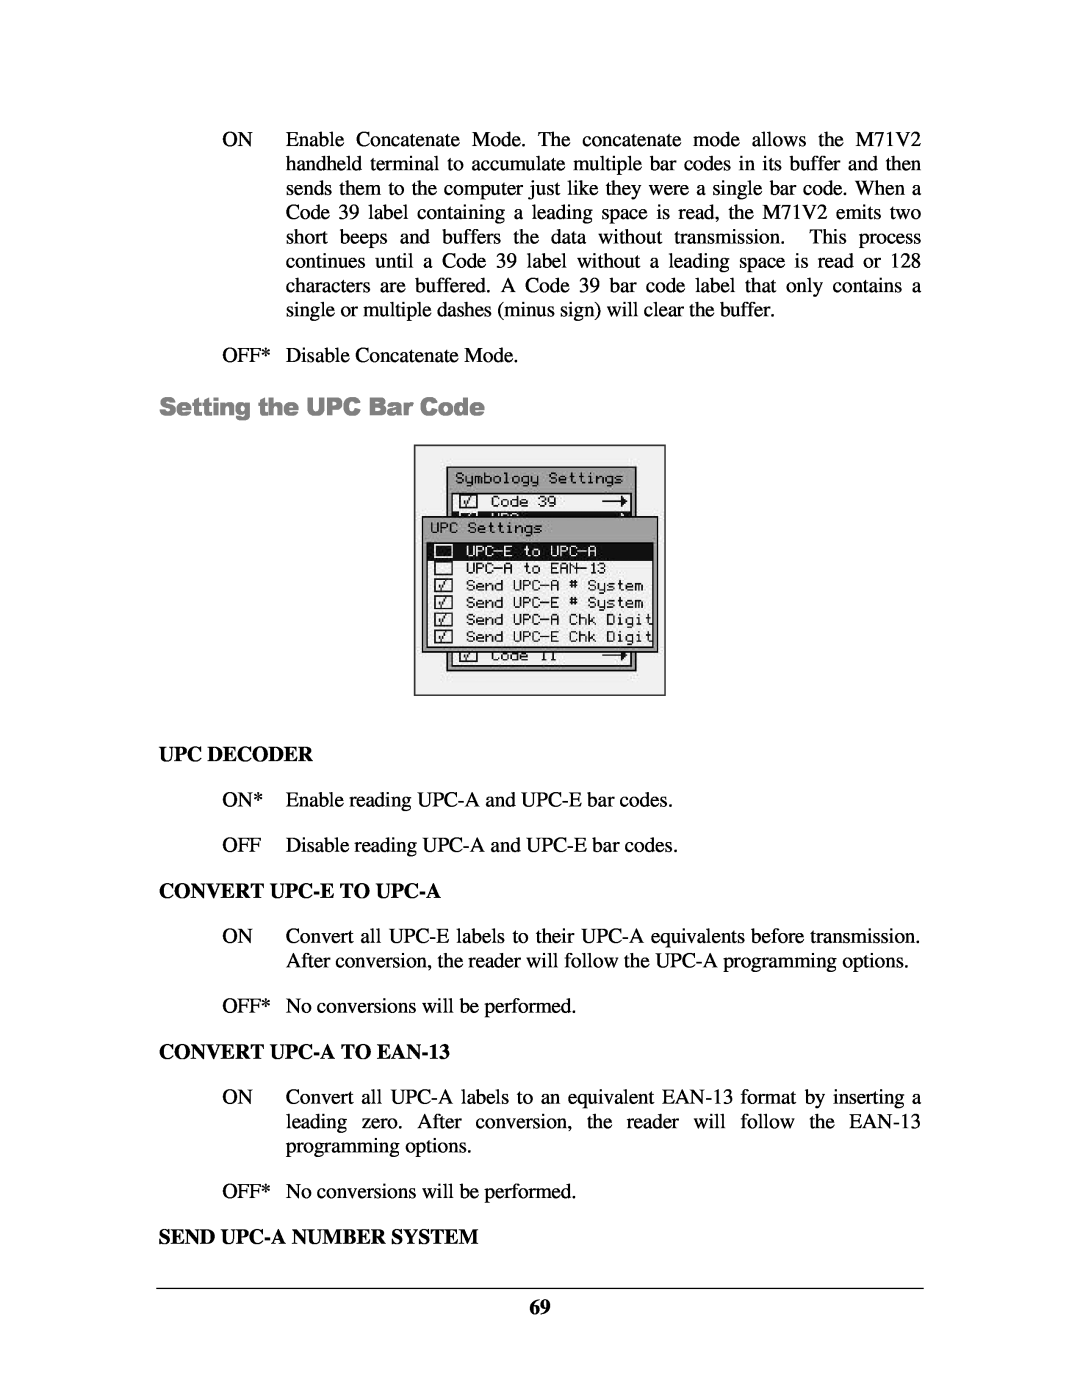 IBM M71V2 Setting the UPC Bar Code, Upc Decoder, Convert Upc-E To Upc-A, CONVERT UPC-A TO EAN-13, Send Upc-A Number System 